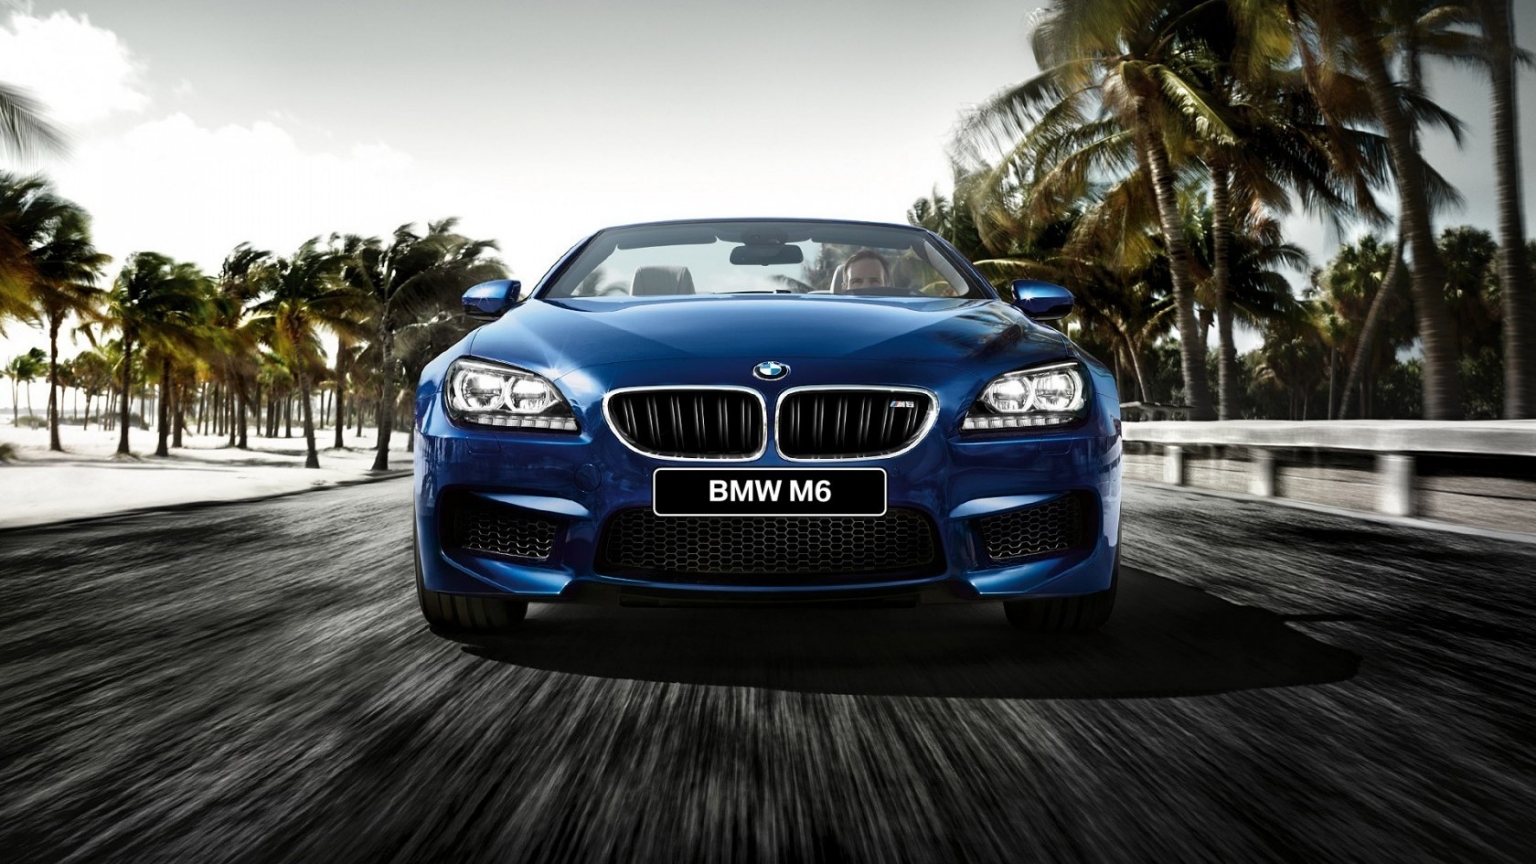 BMW M6 F12 Cabrio for 1536 x 864 HDTV resolution